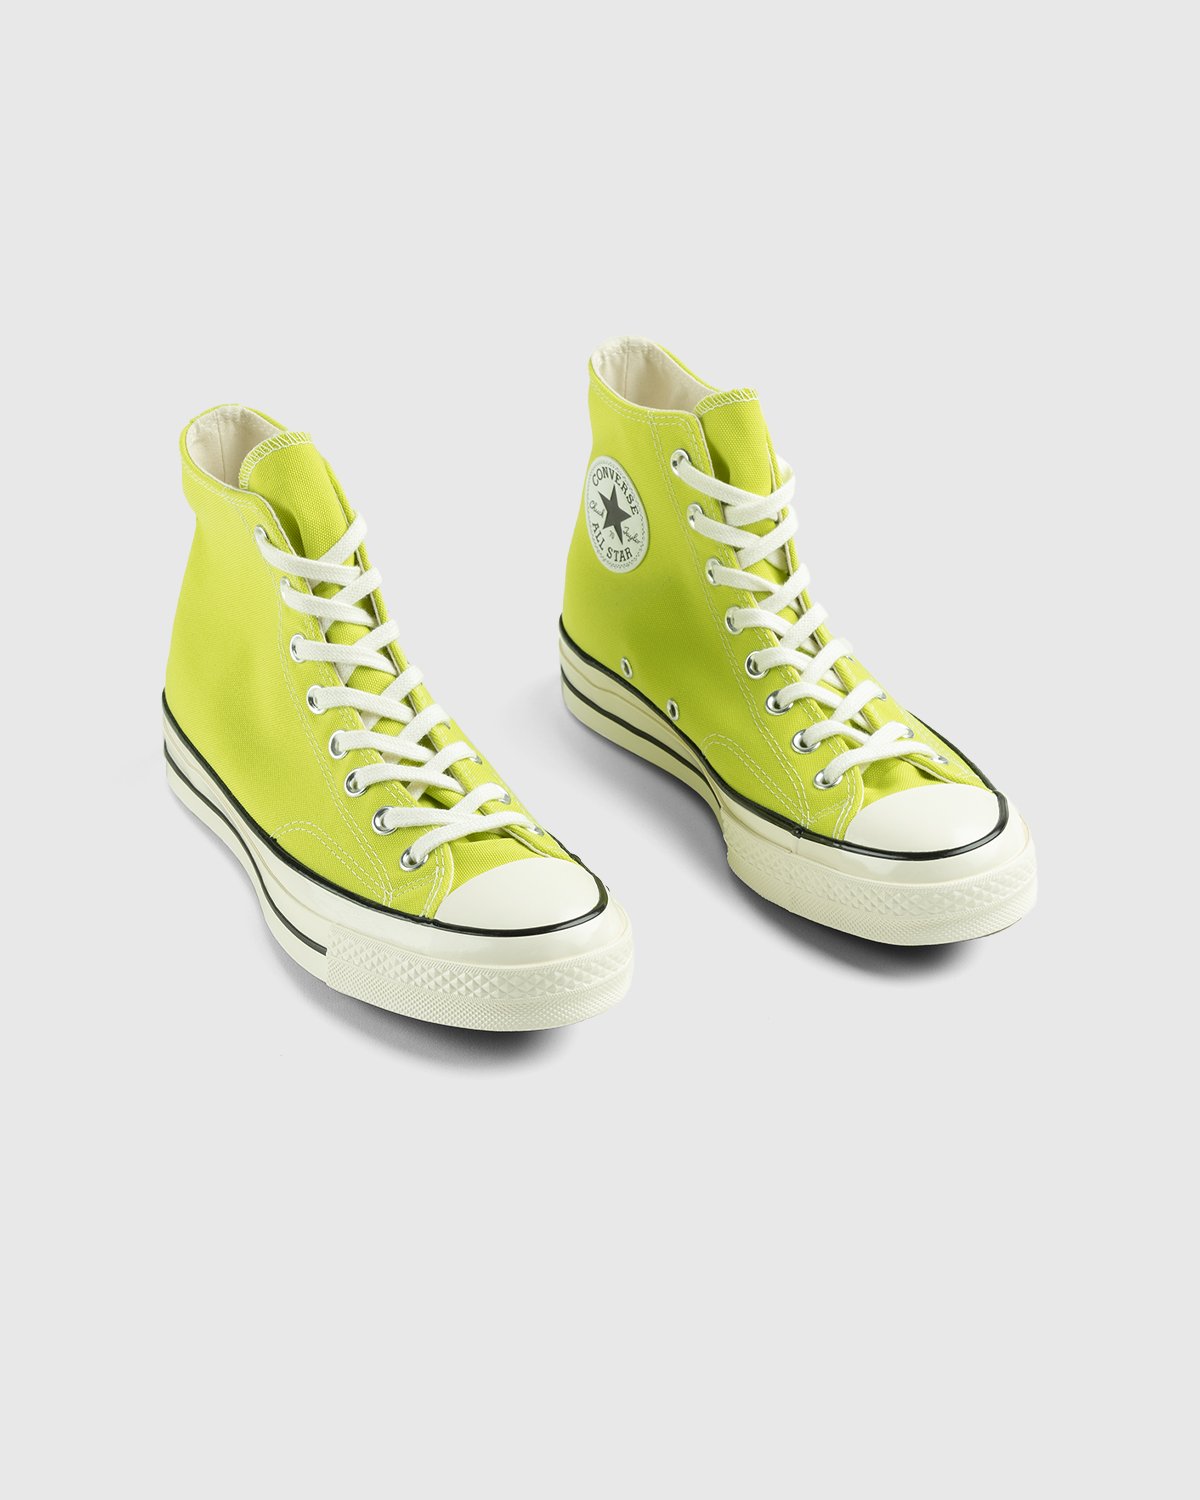 Converse - Chuck 70 Lime Twist Egret Black - Footwear - Yellow - Image 3